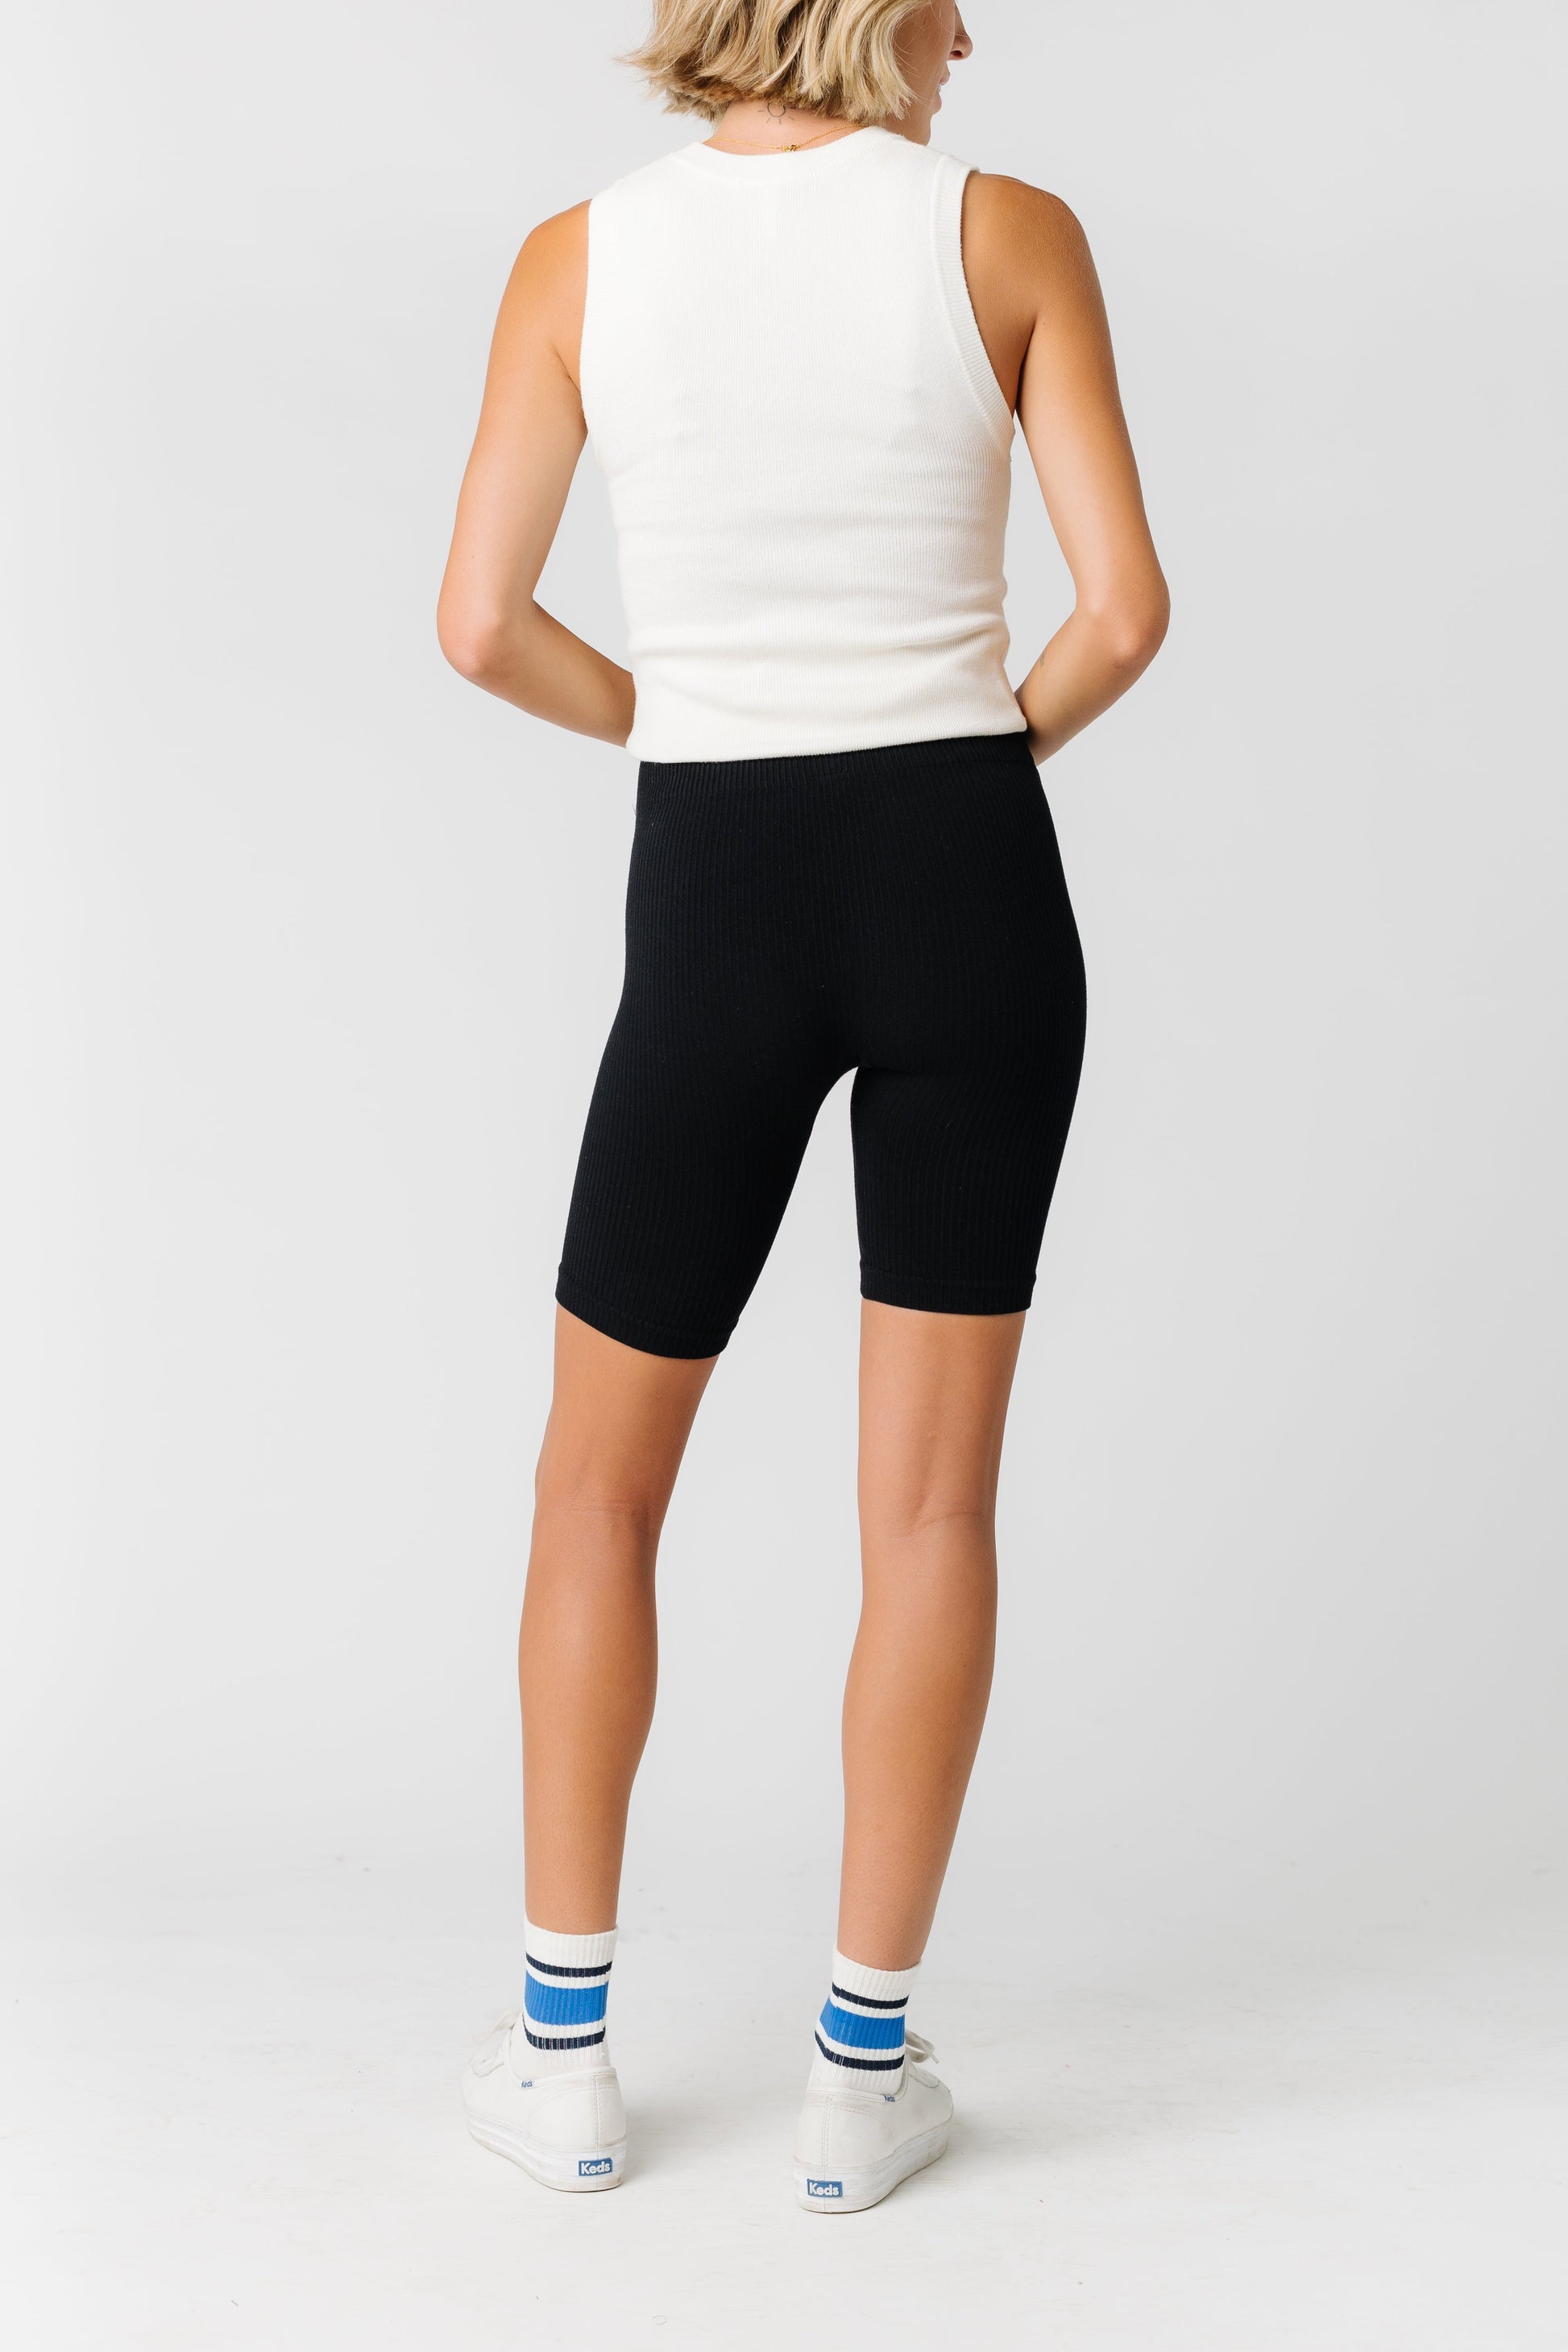 Ribbed Seamless Biker Shorts Women's Athletic Mono B 